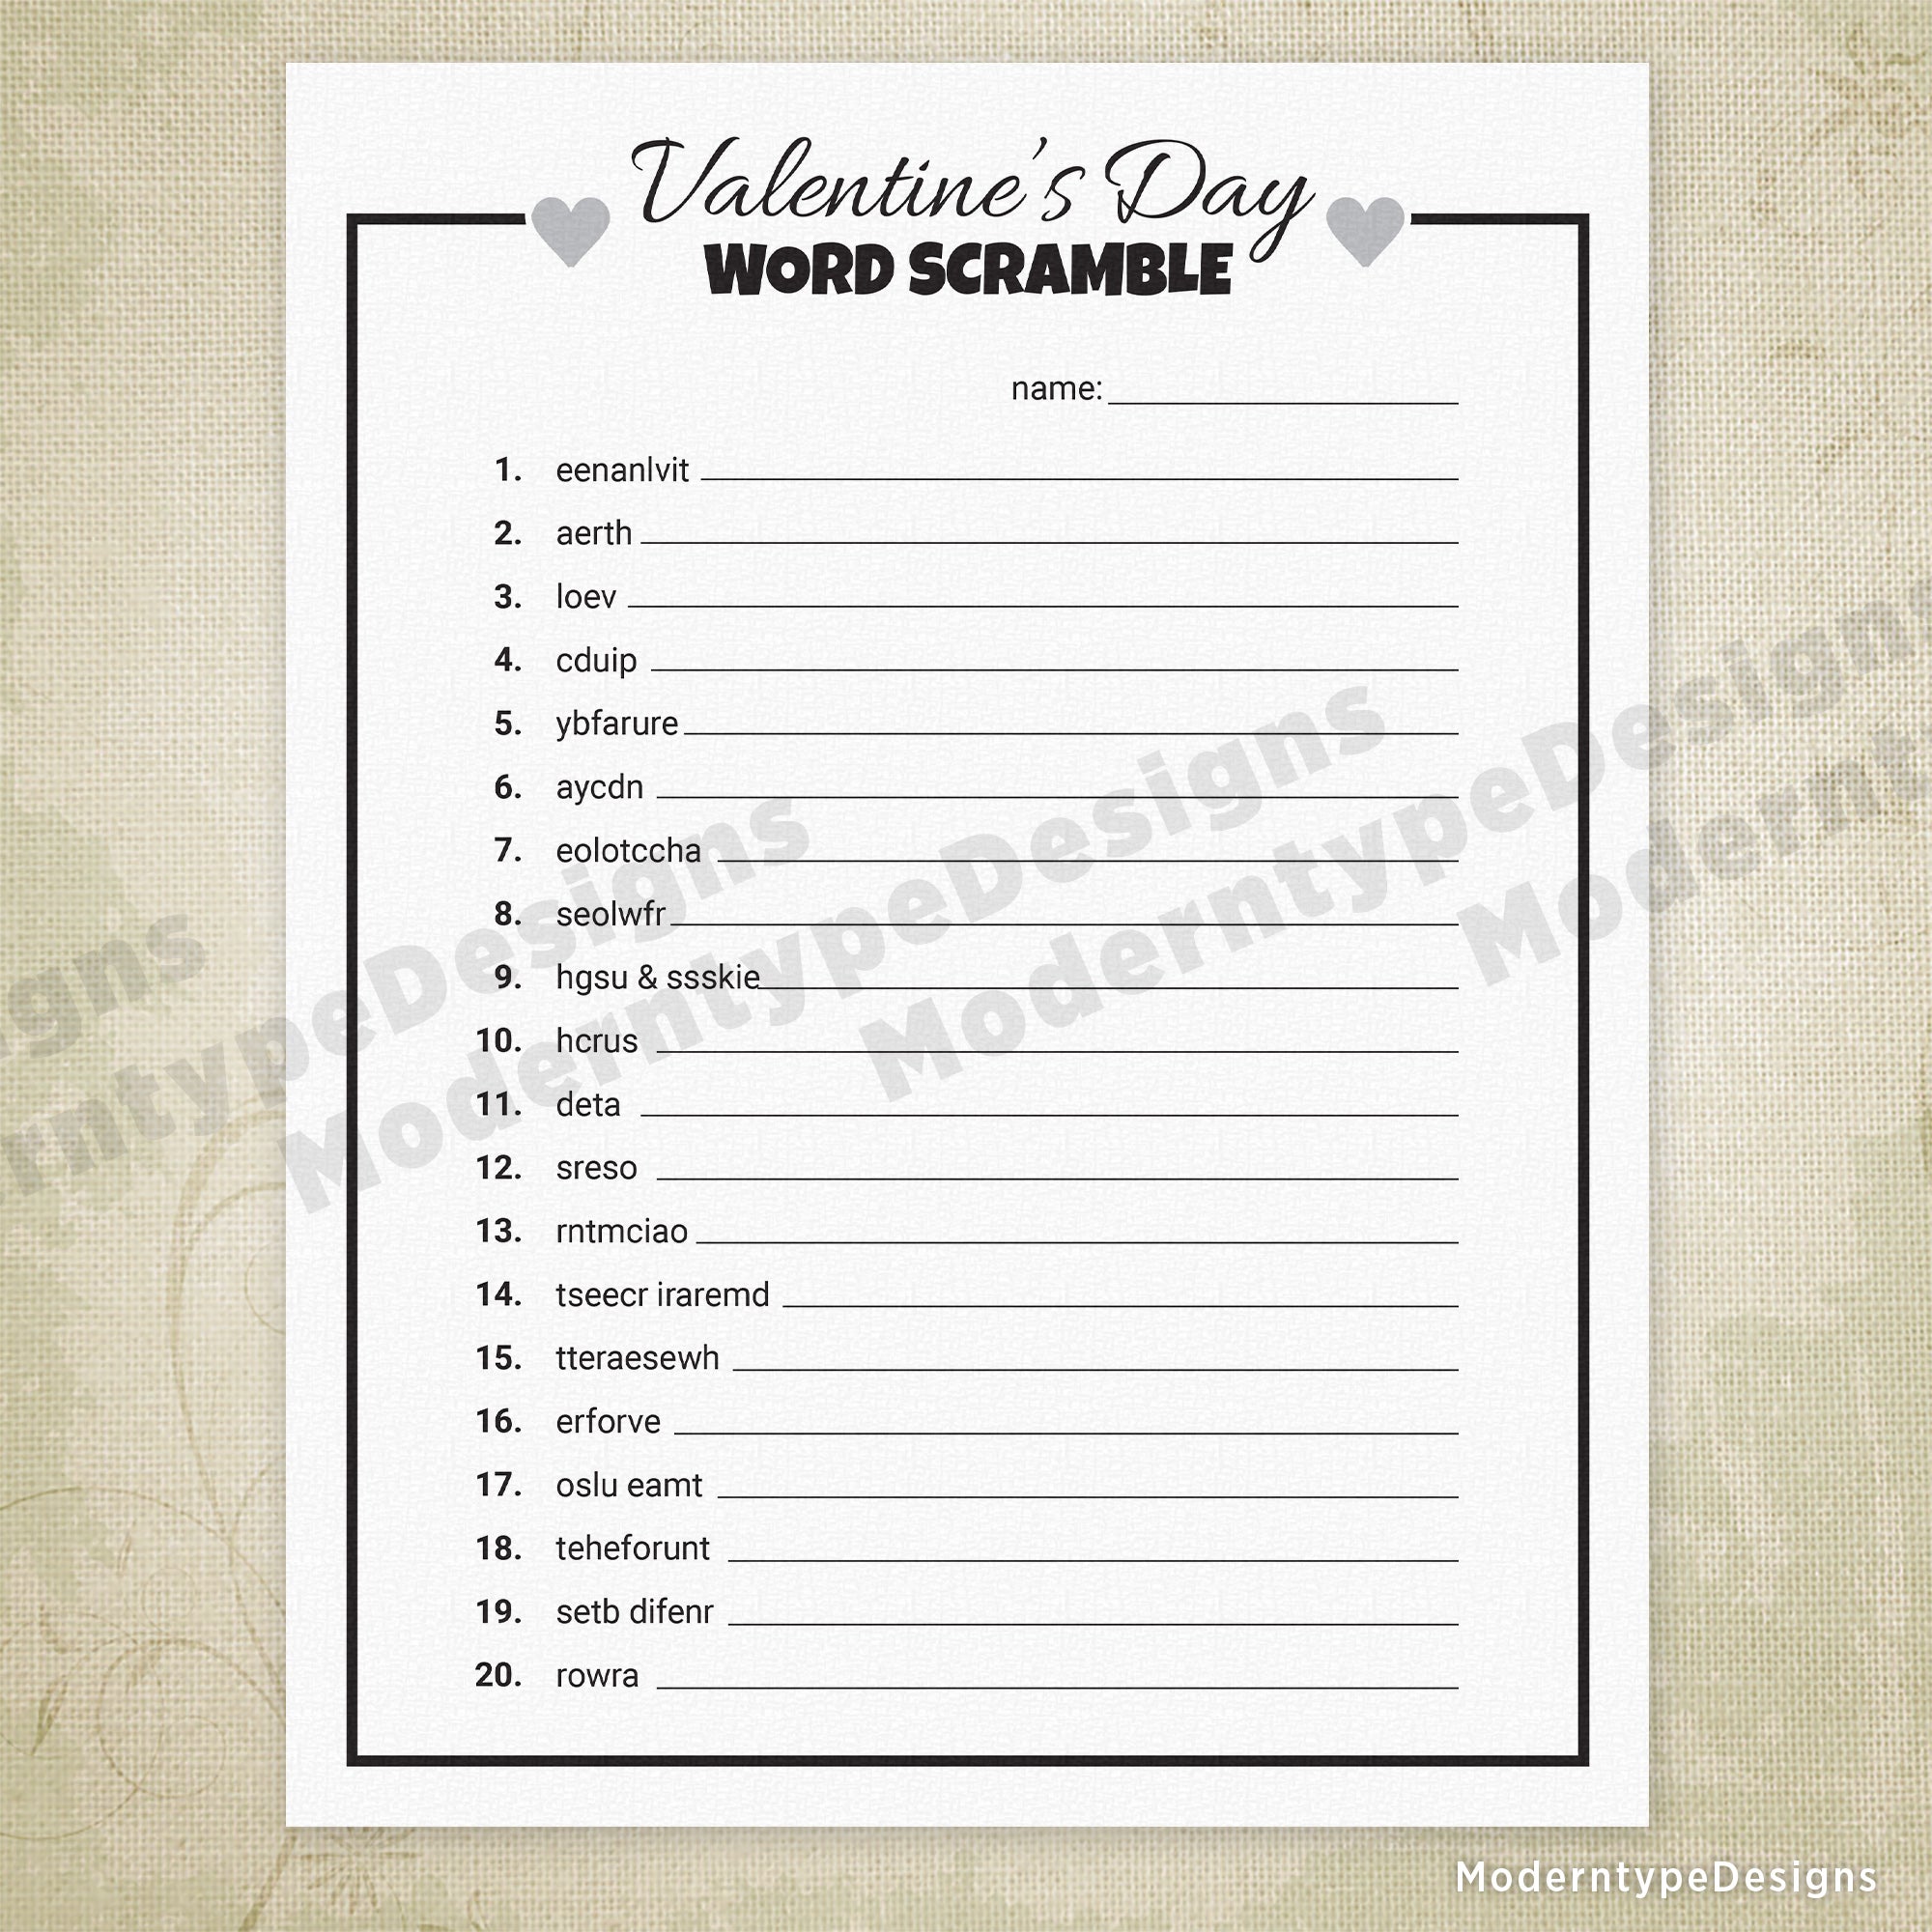 Valentine's Day Word Scramble Game Printable